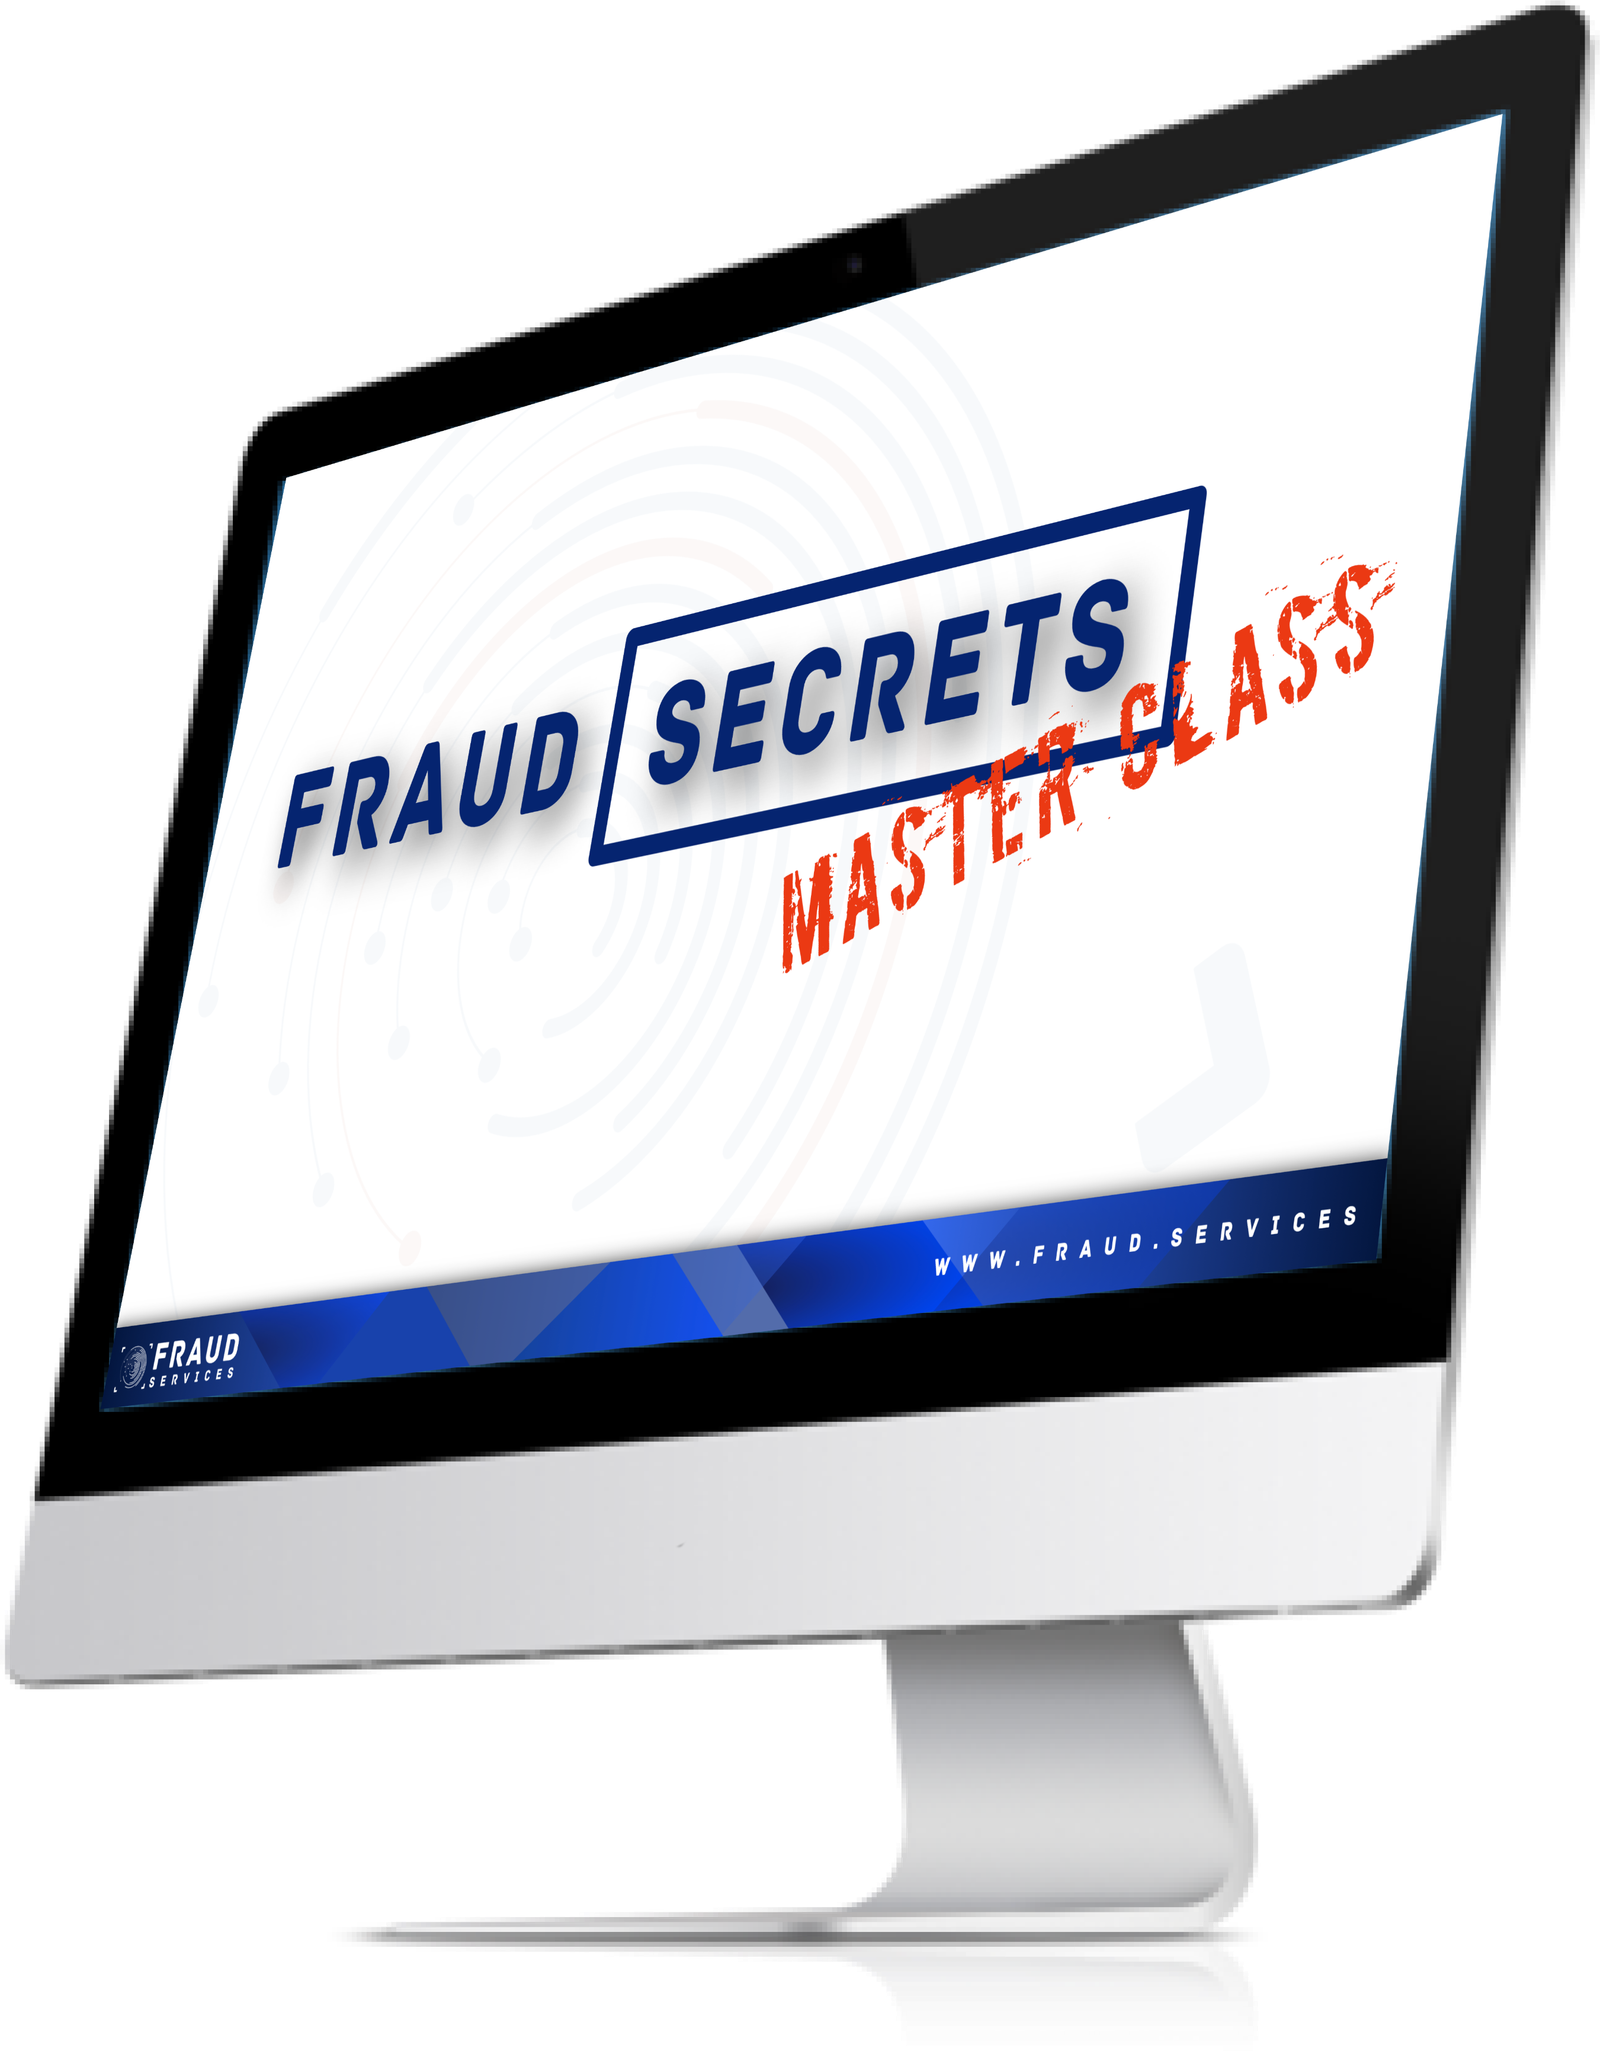 Fraud Secrets Masterclass